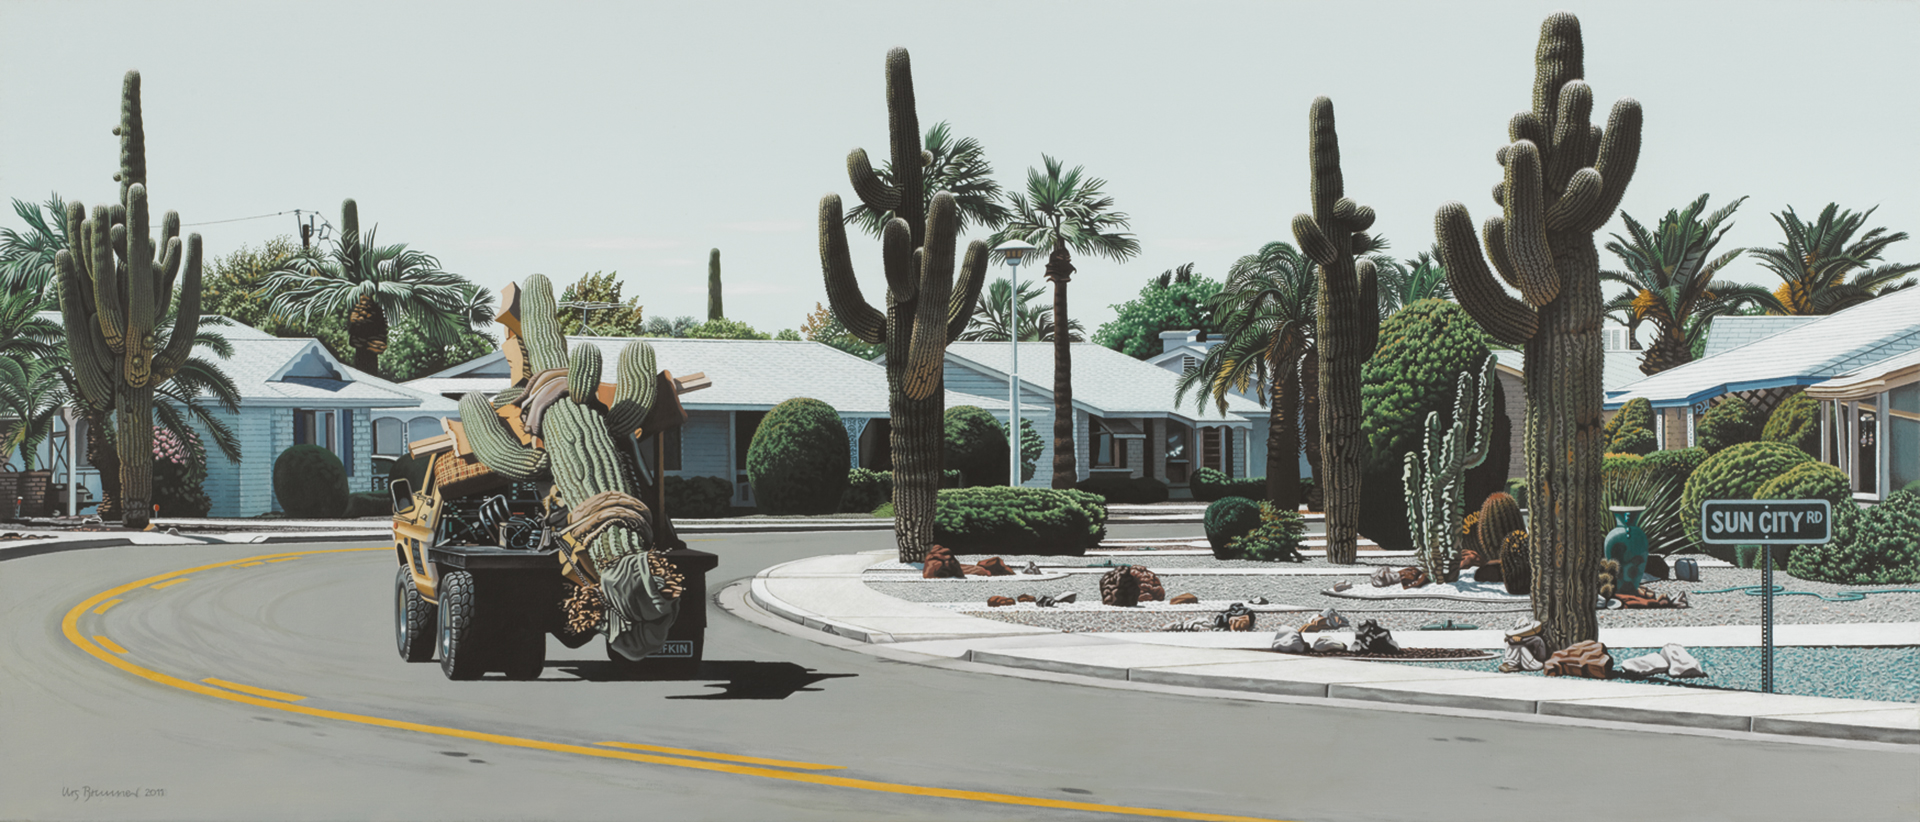 Sun City / Arizona, 2011, Acryl auf Leinwand, 60 x 140 cm